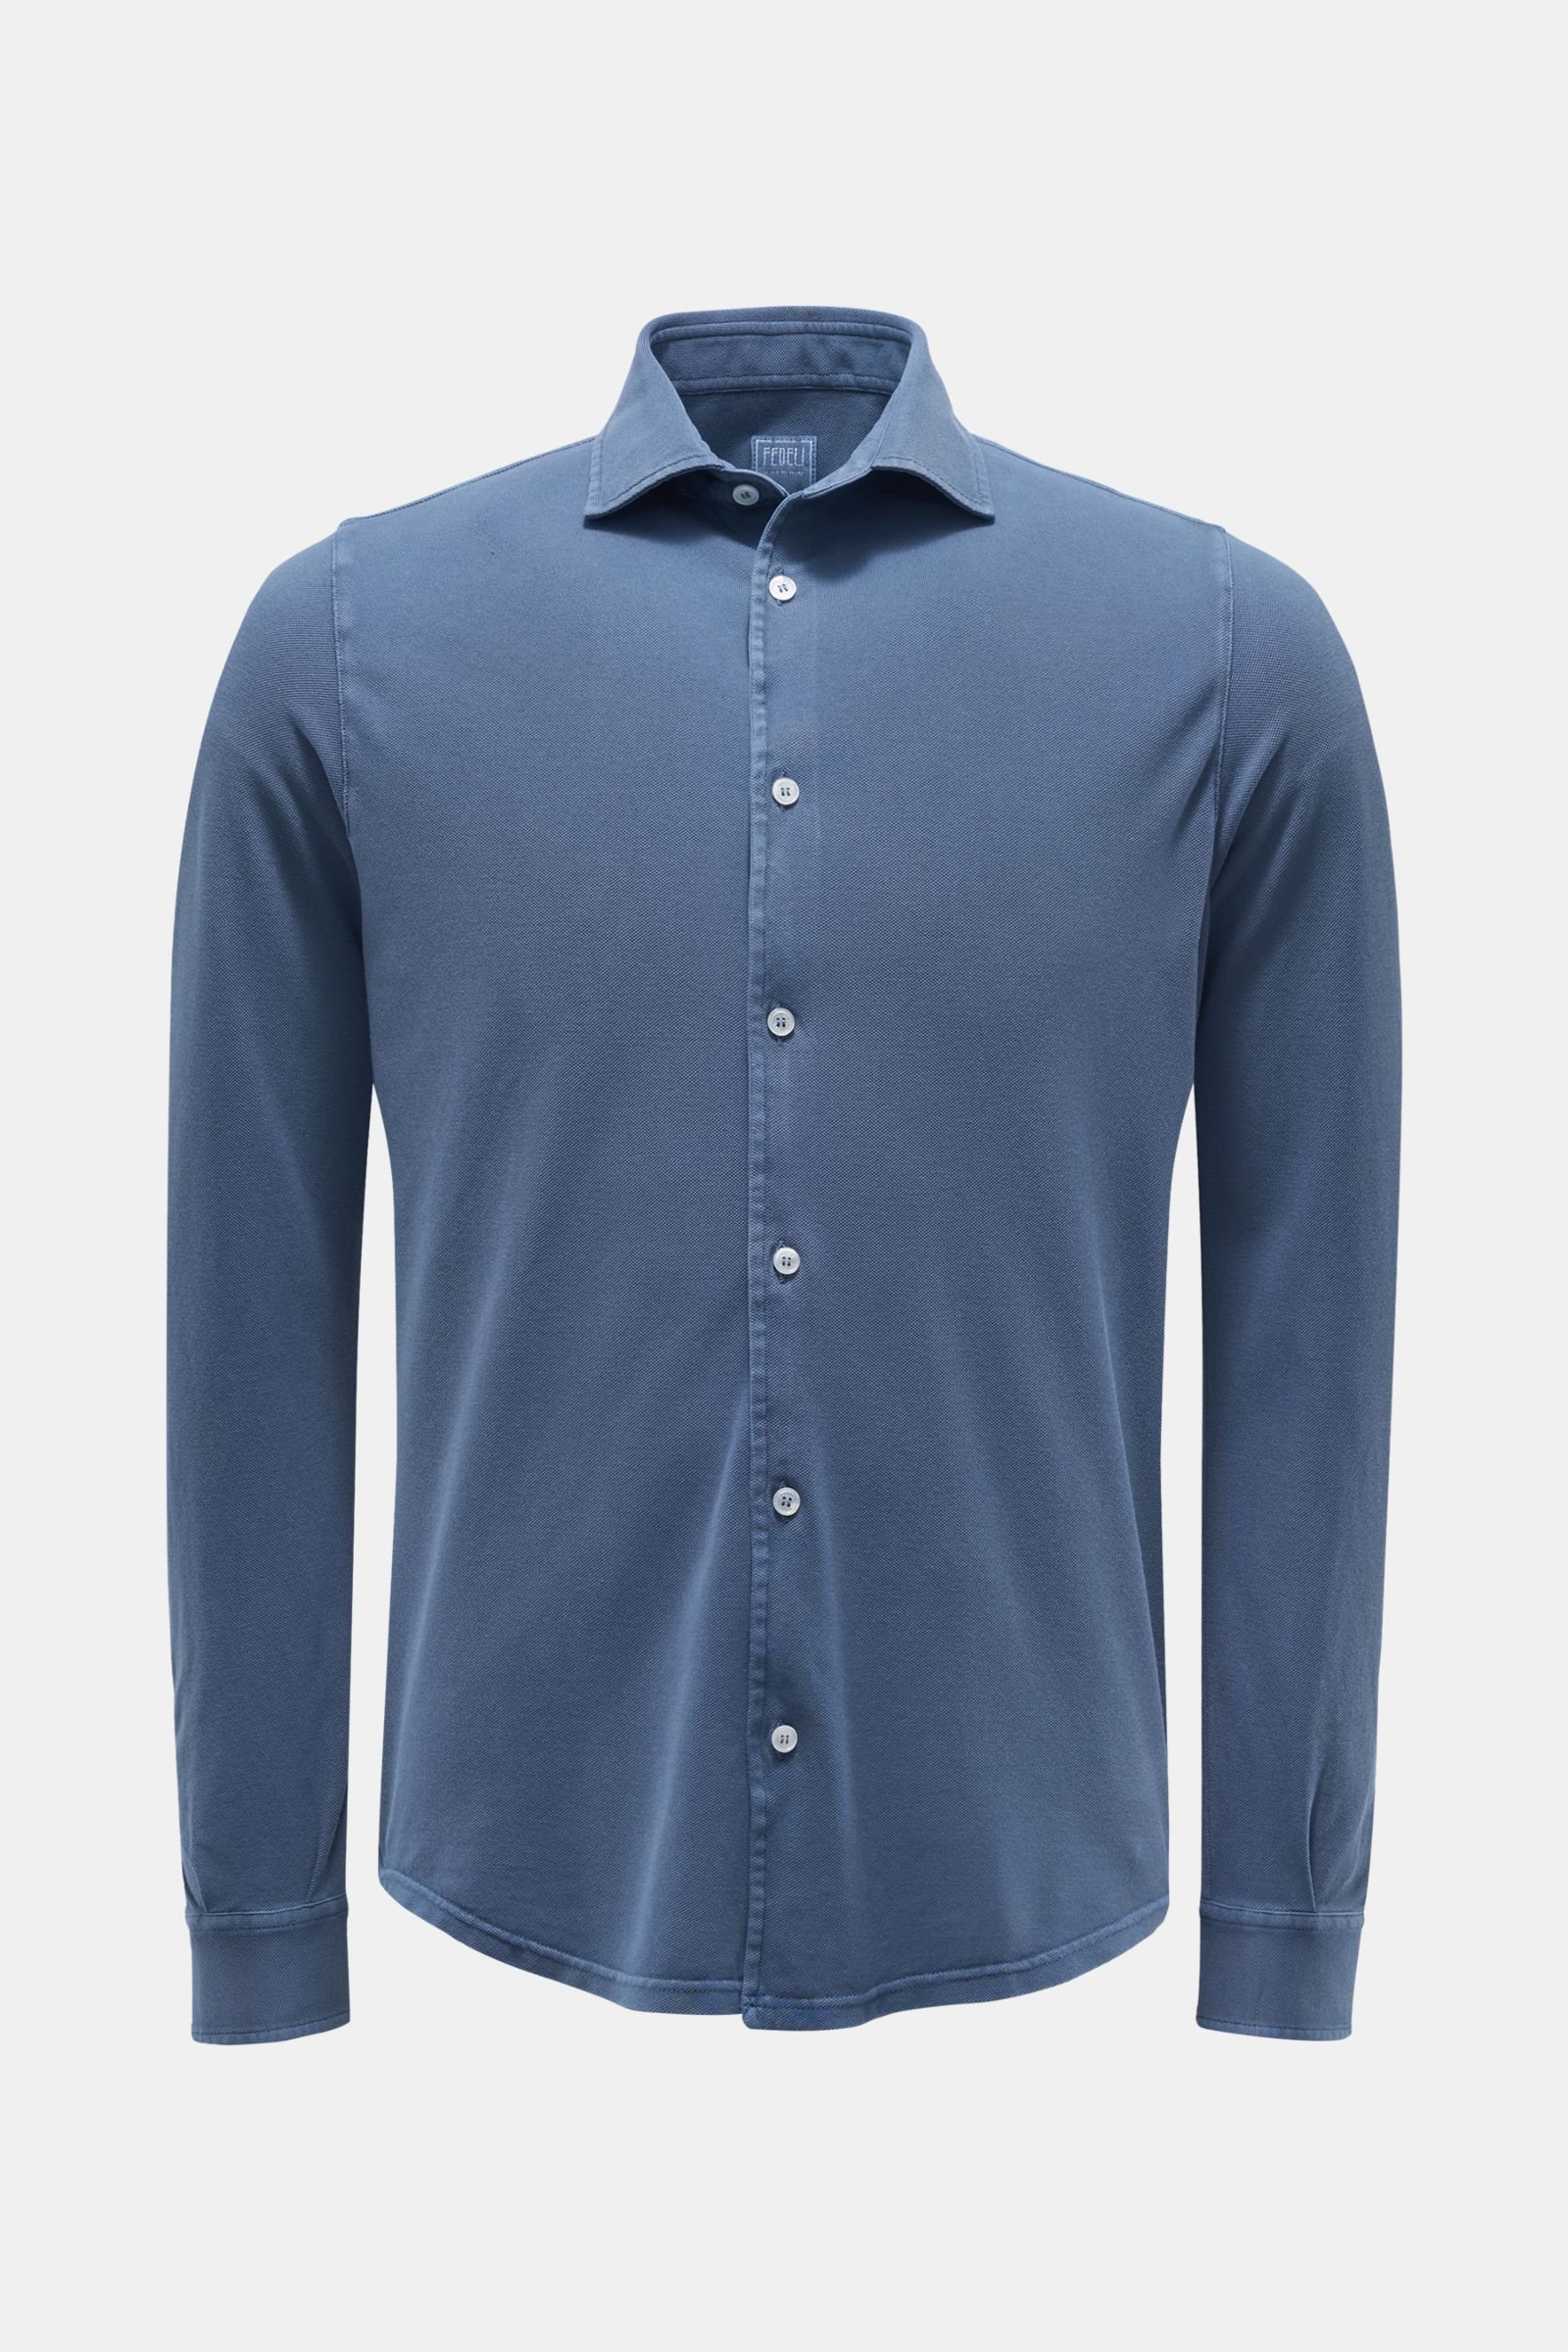 Piqué shirt 'Steve' slim collar grey-blue